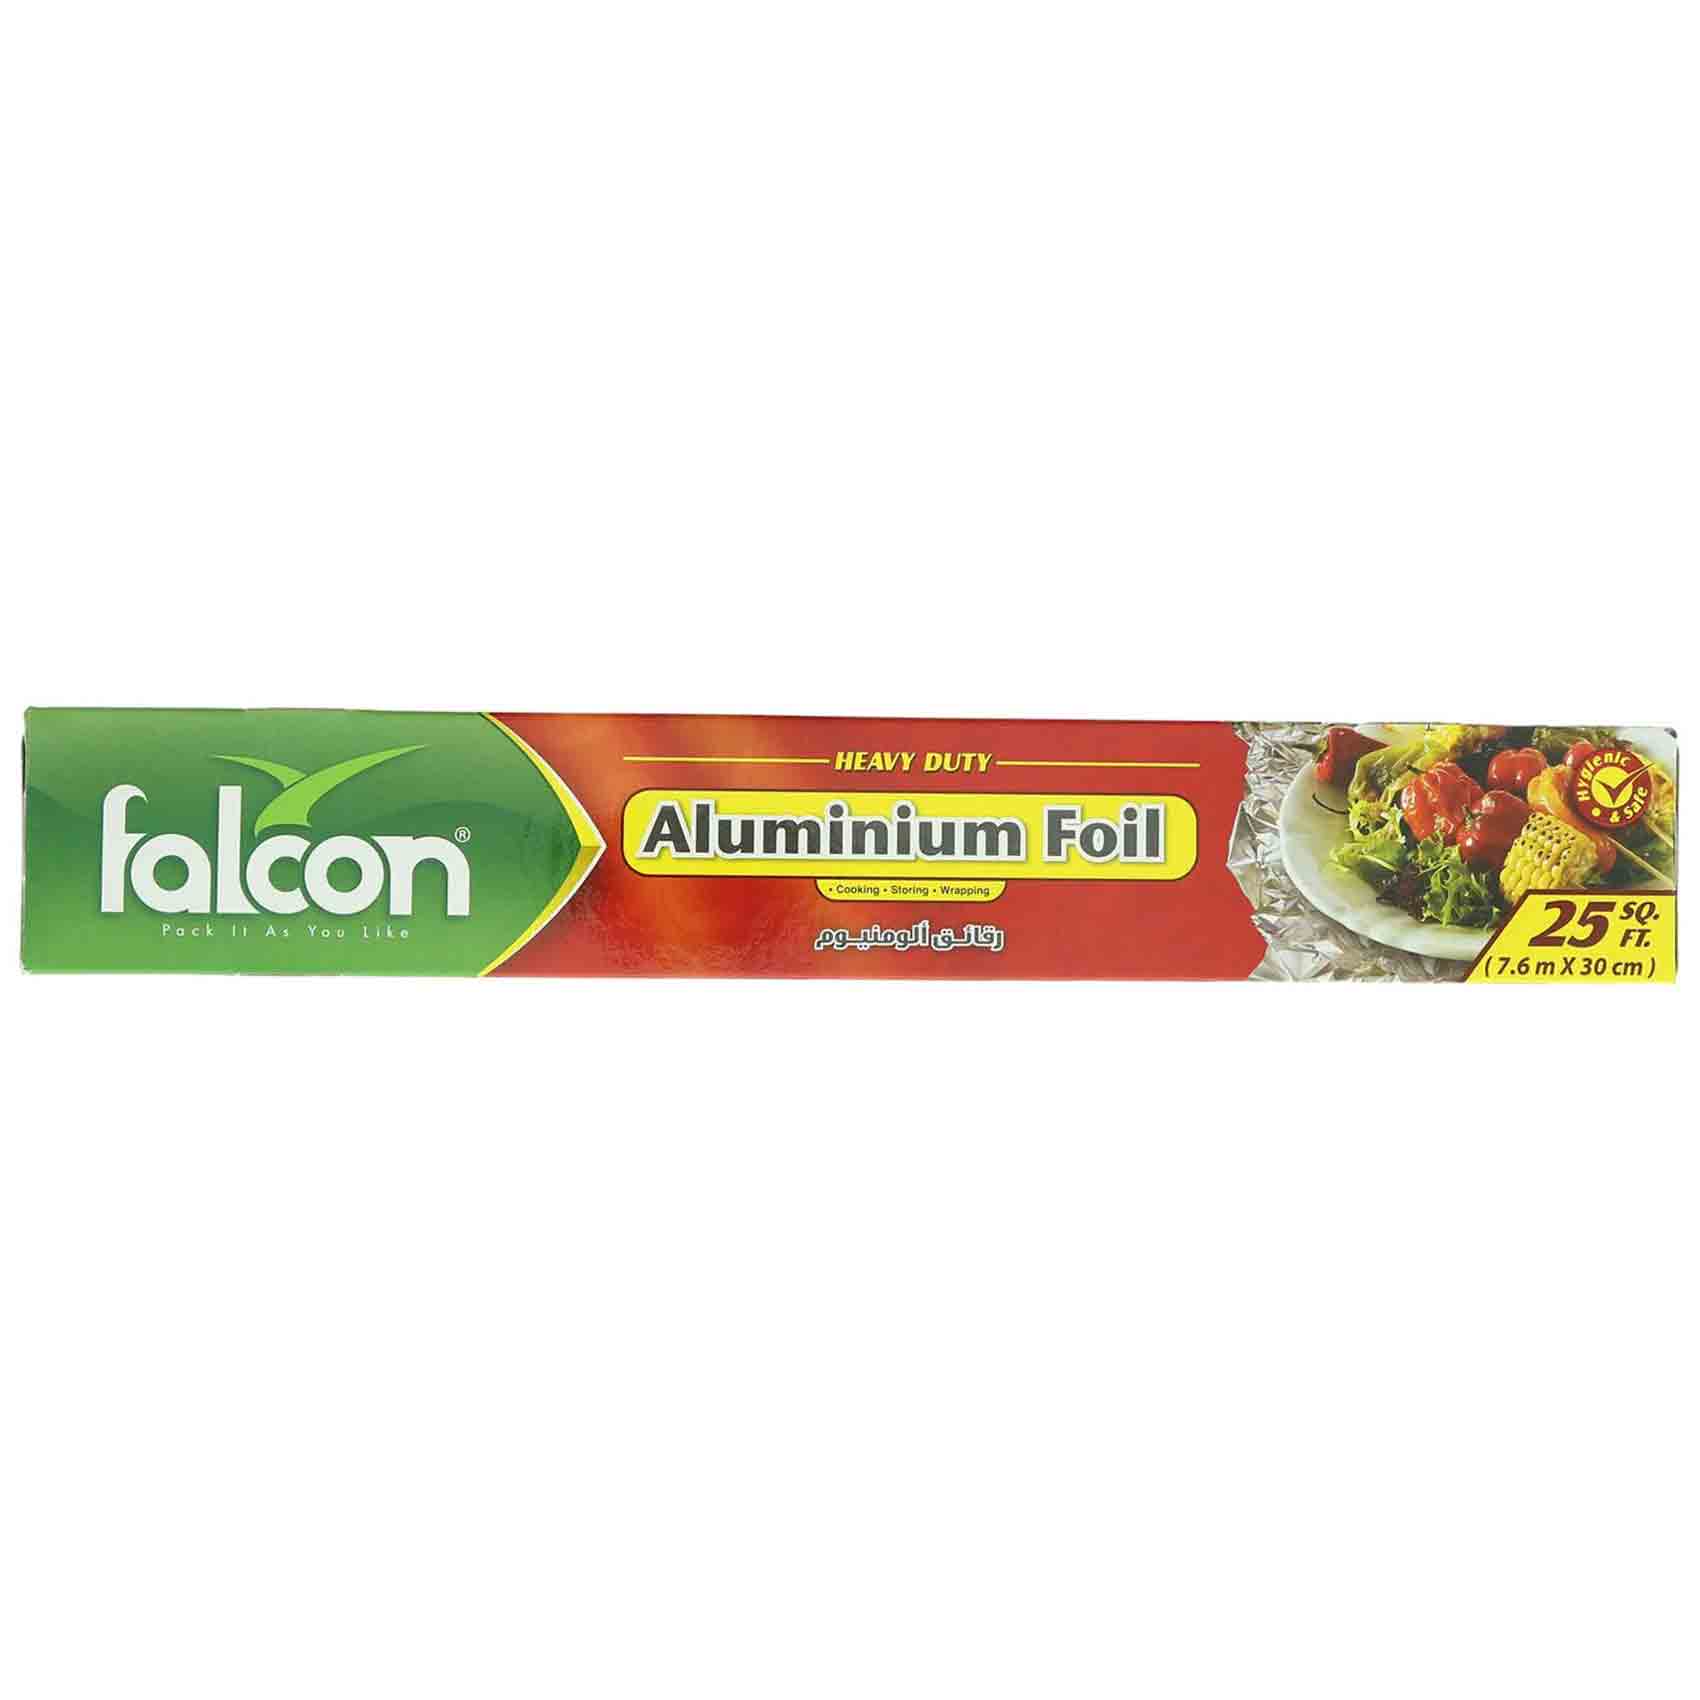 Falcon Aluminium Foil 7.6Mx30 Cm